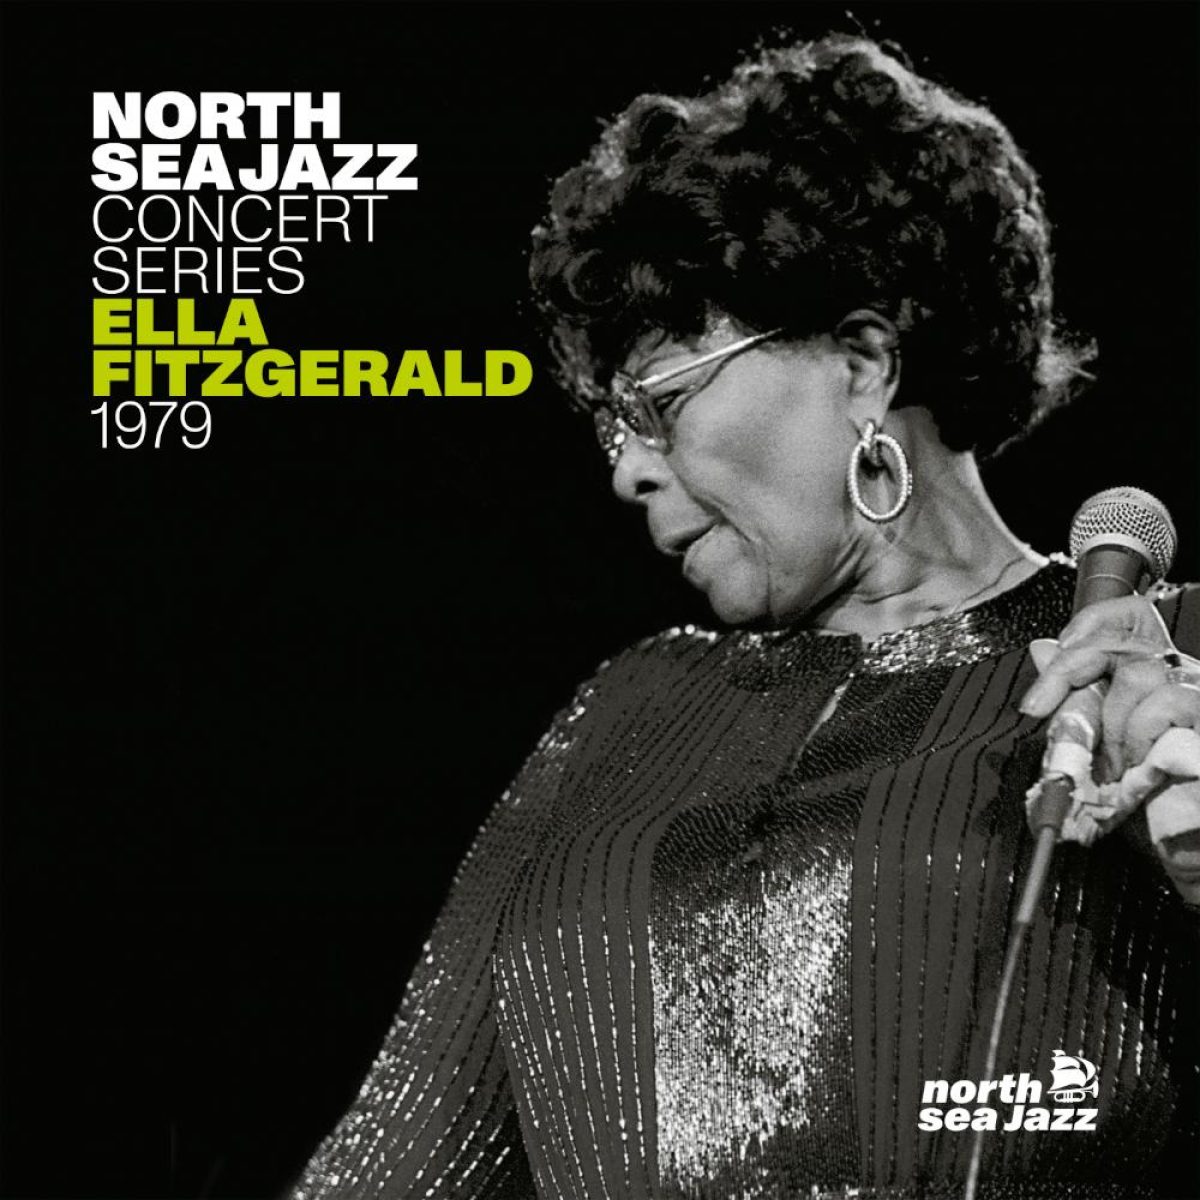 North Sea Jazz Concert Series - Ella Fitzgerald